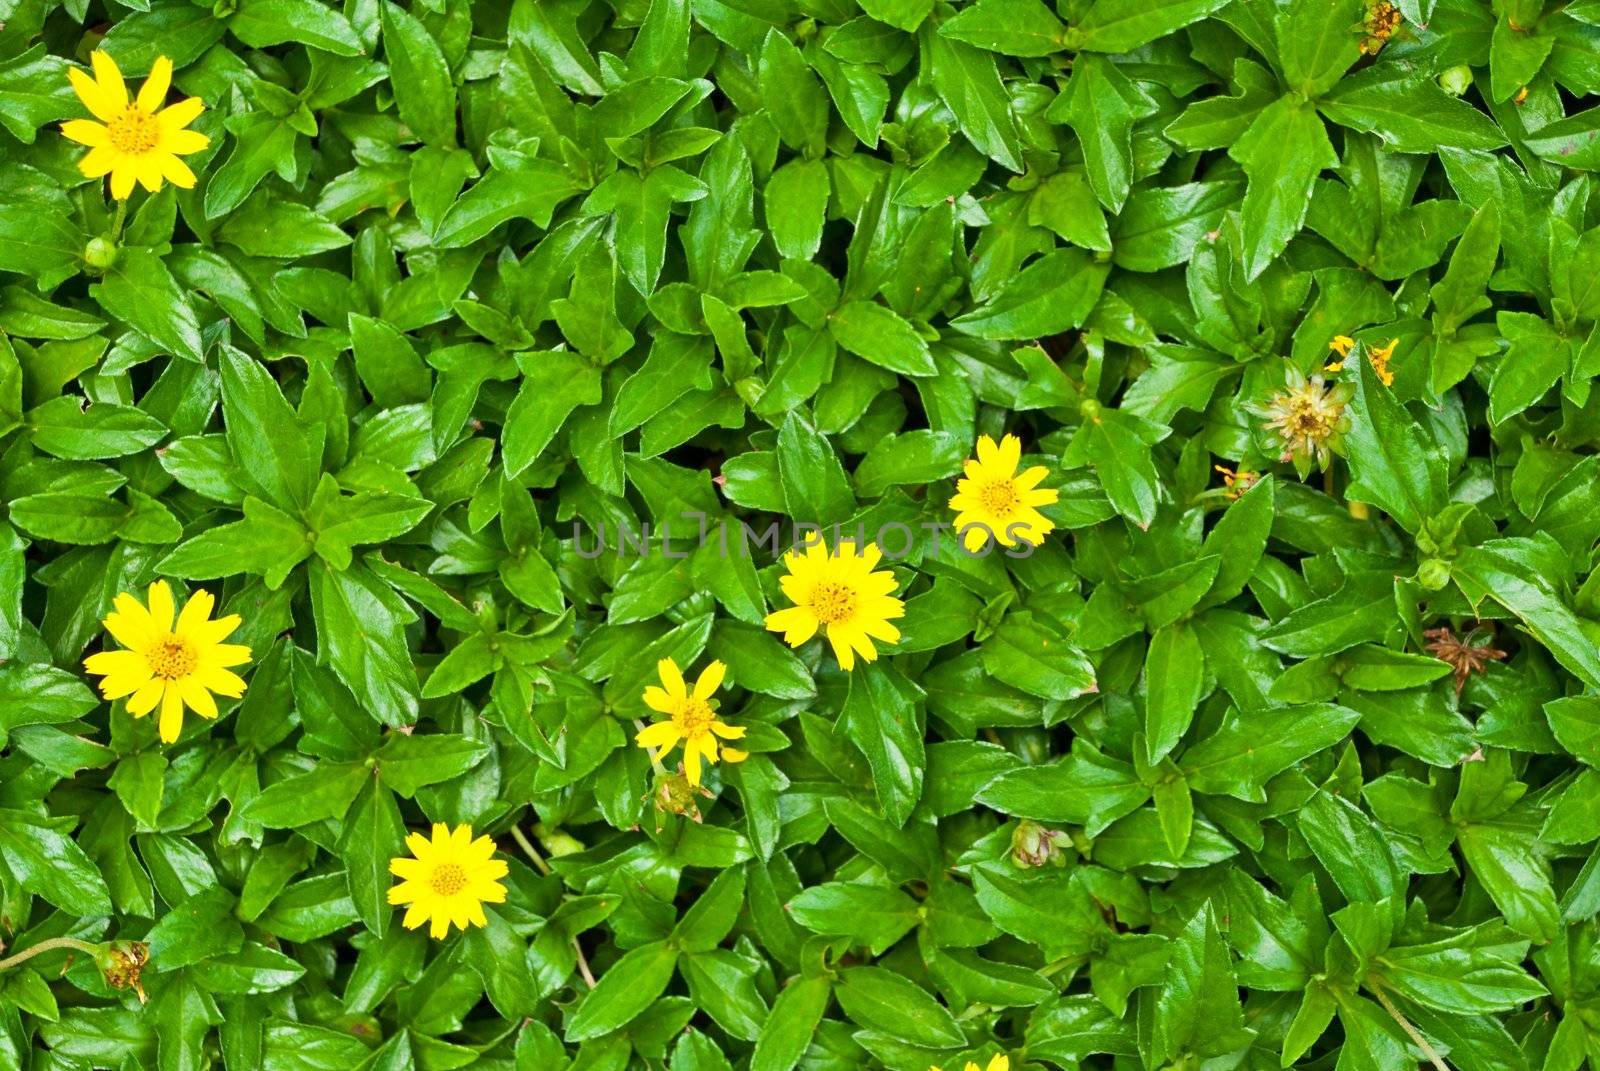 Yellow garden flower on grass, taken from top view
